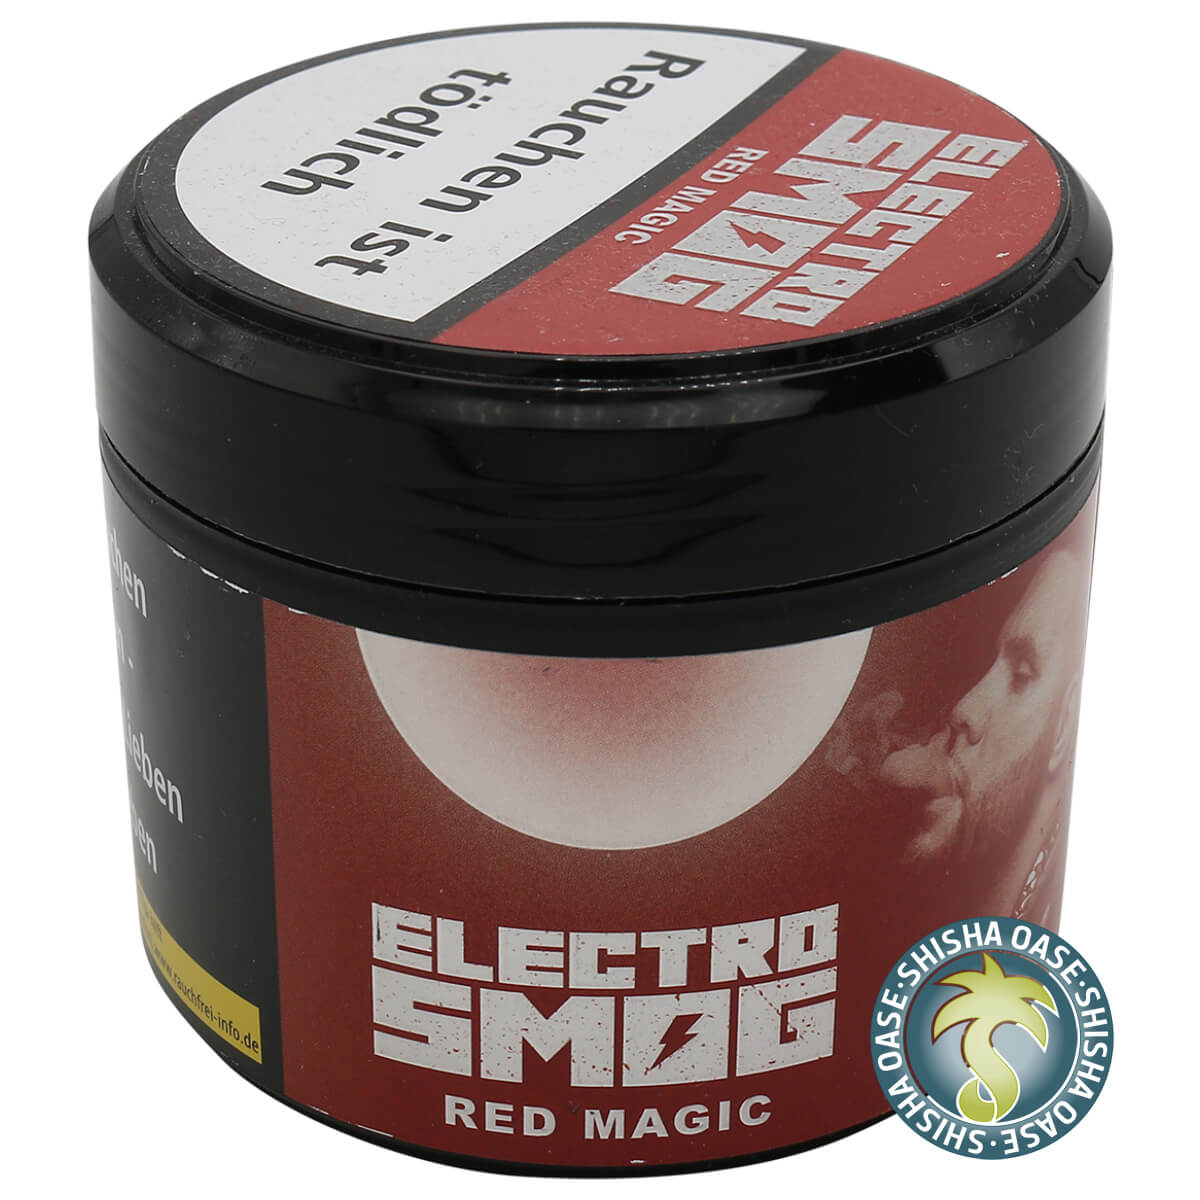 Electro Smog Tabak 200g | Red Magic